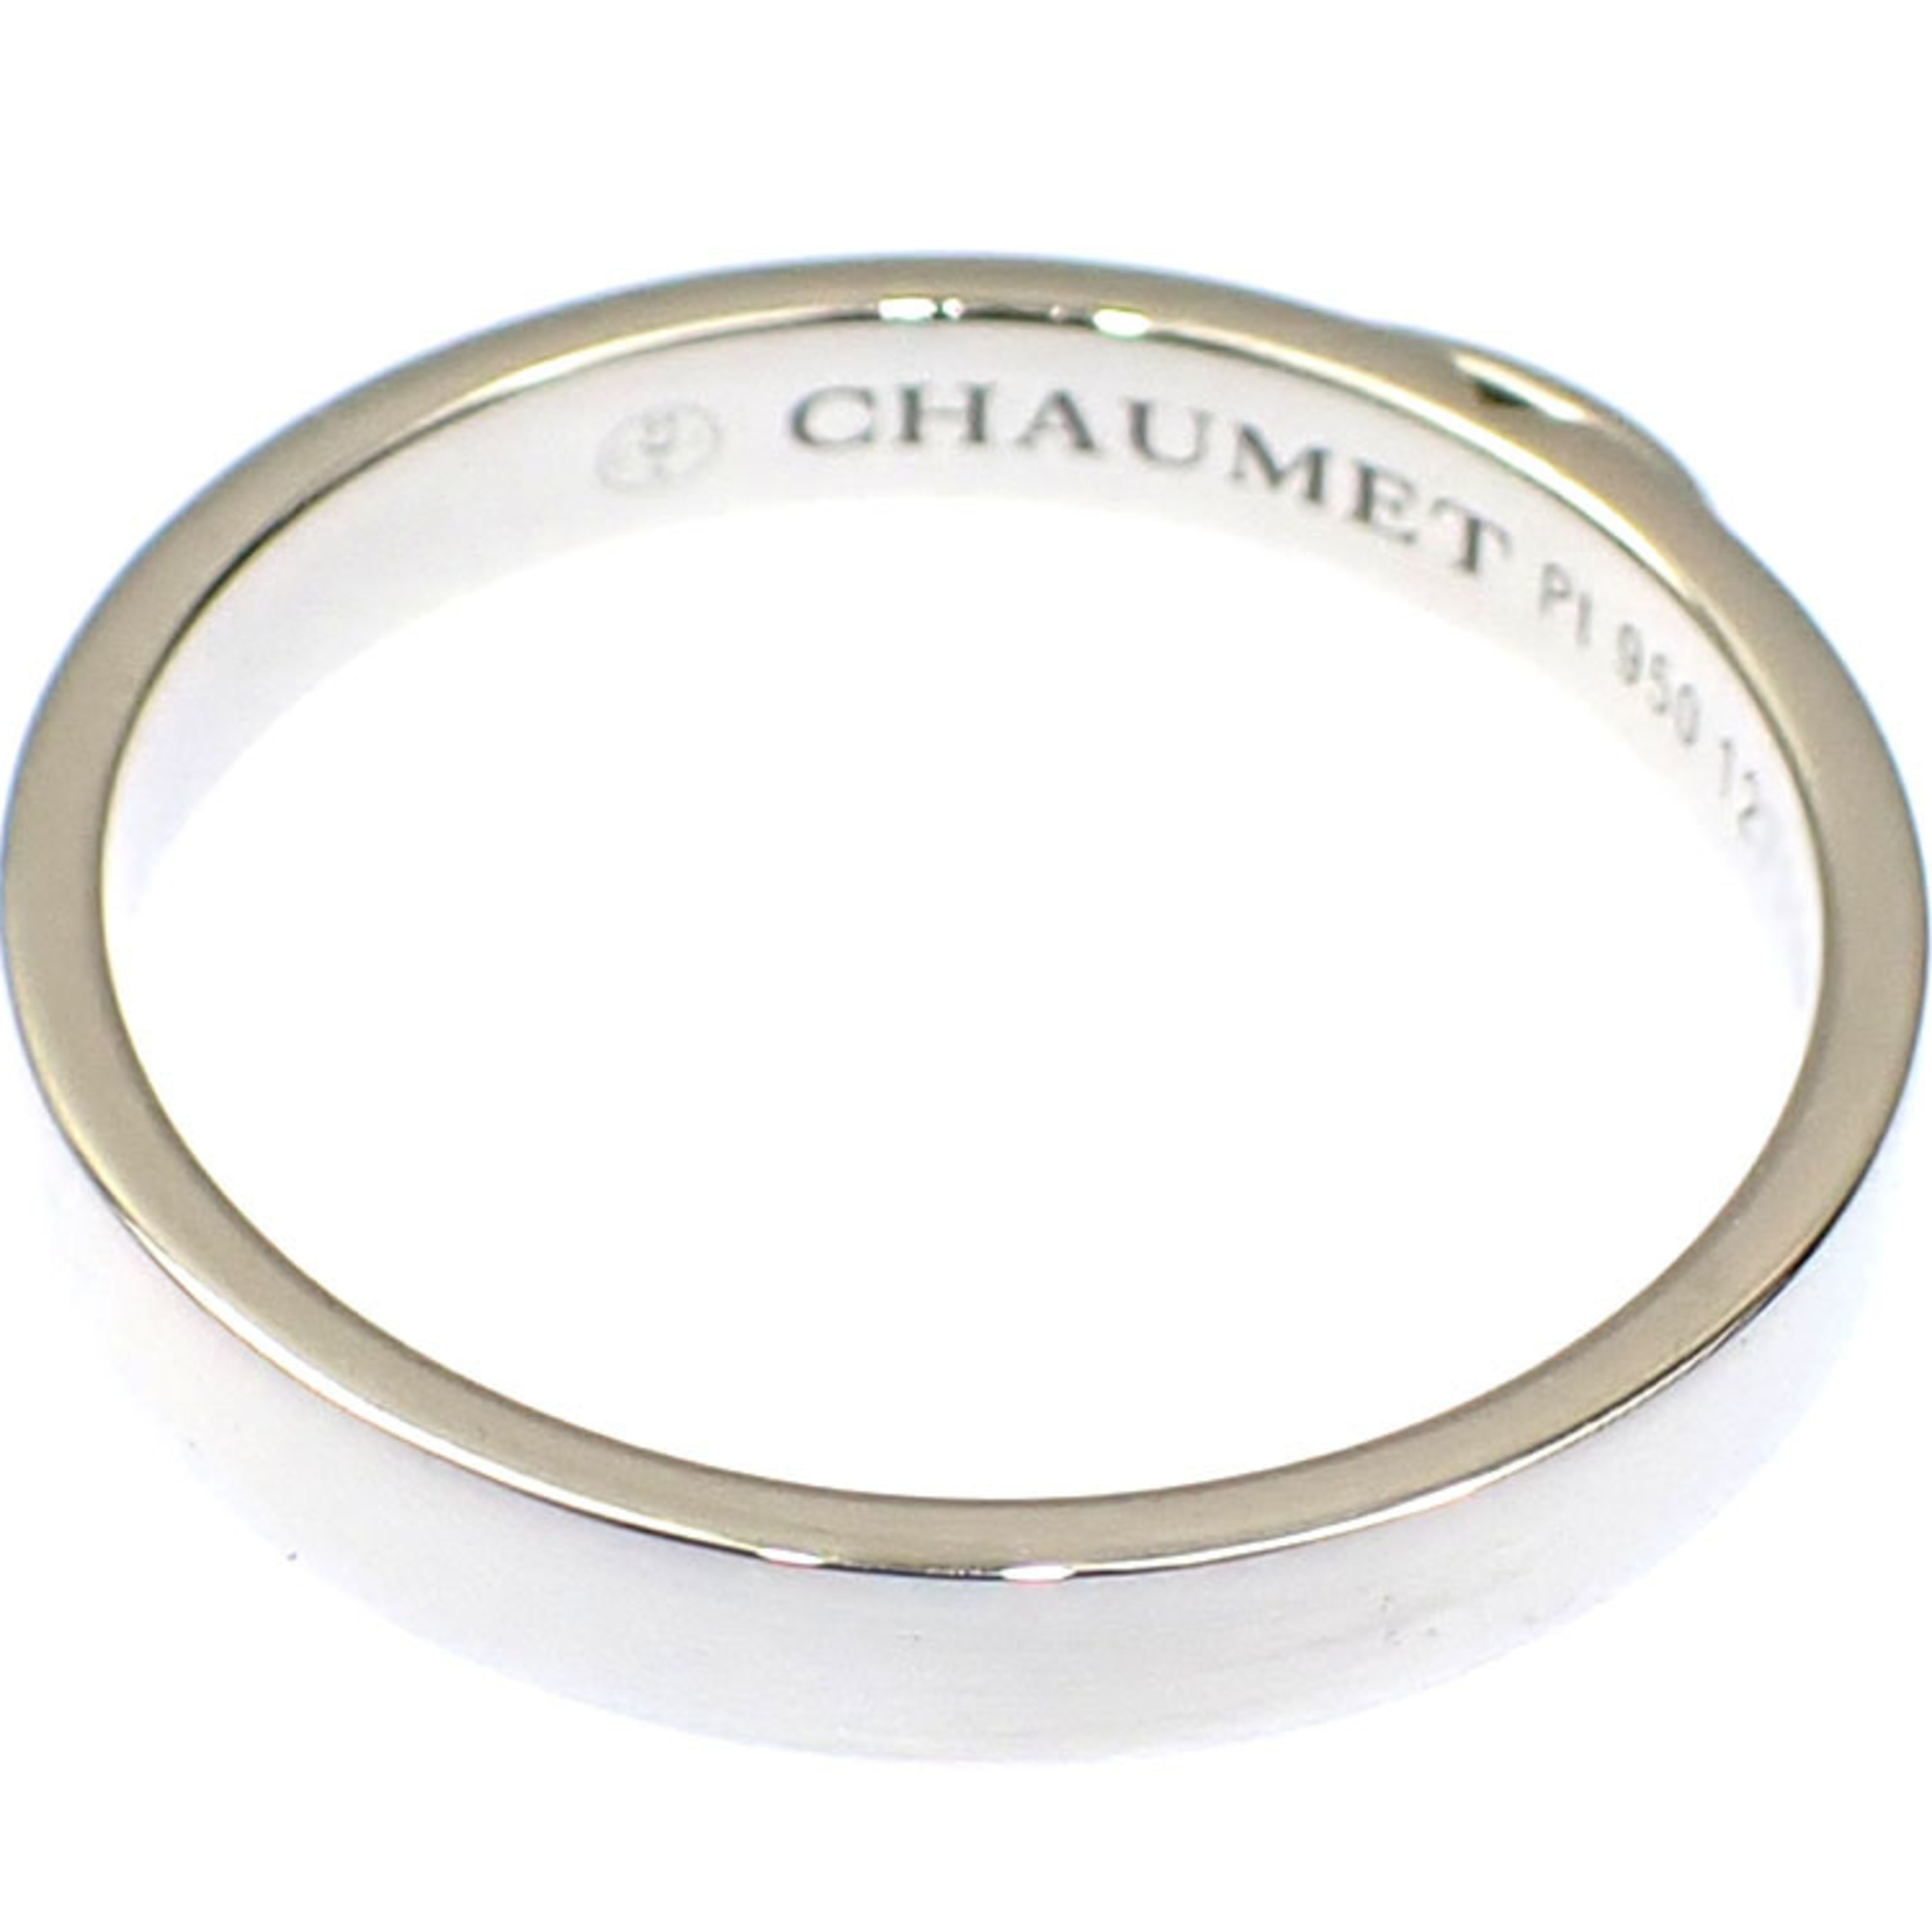 Chaumet Lien Evidence Ring for Women, Pt950, Size 14, 4.5g, Platinum